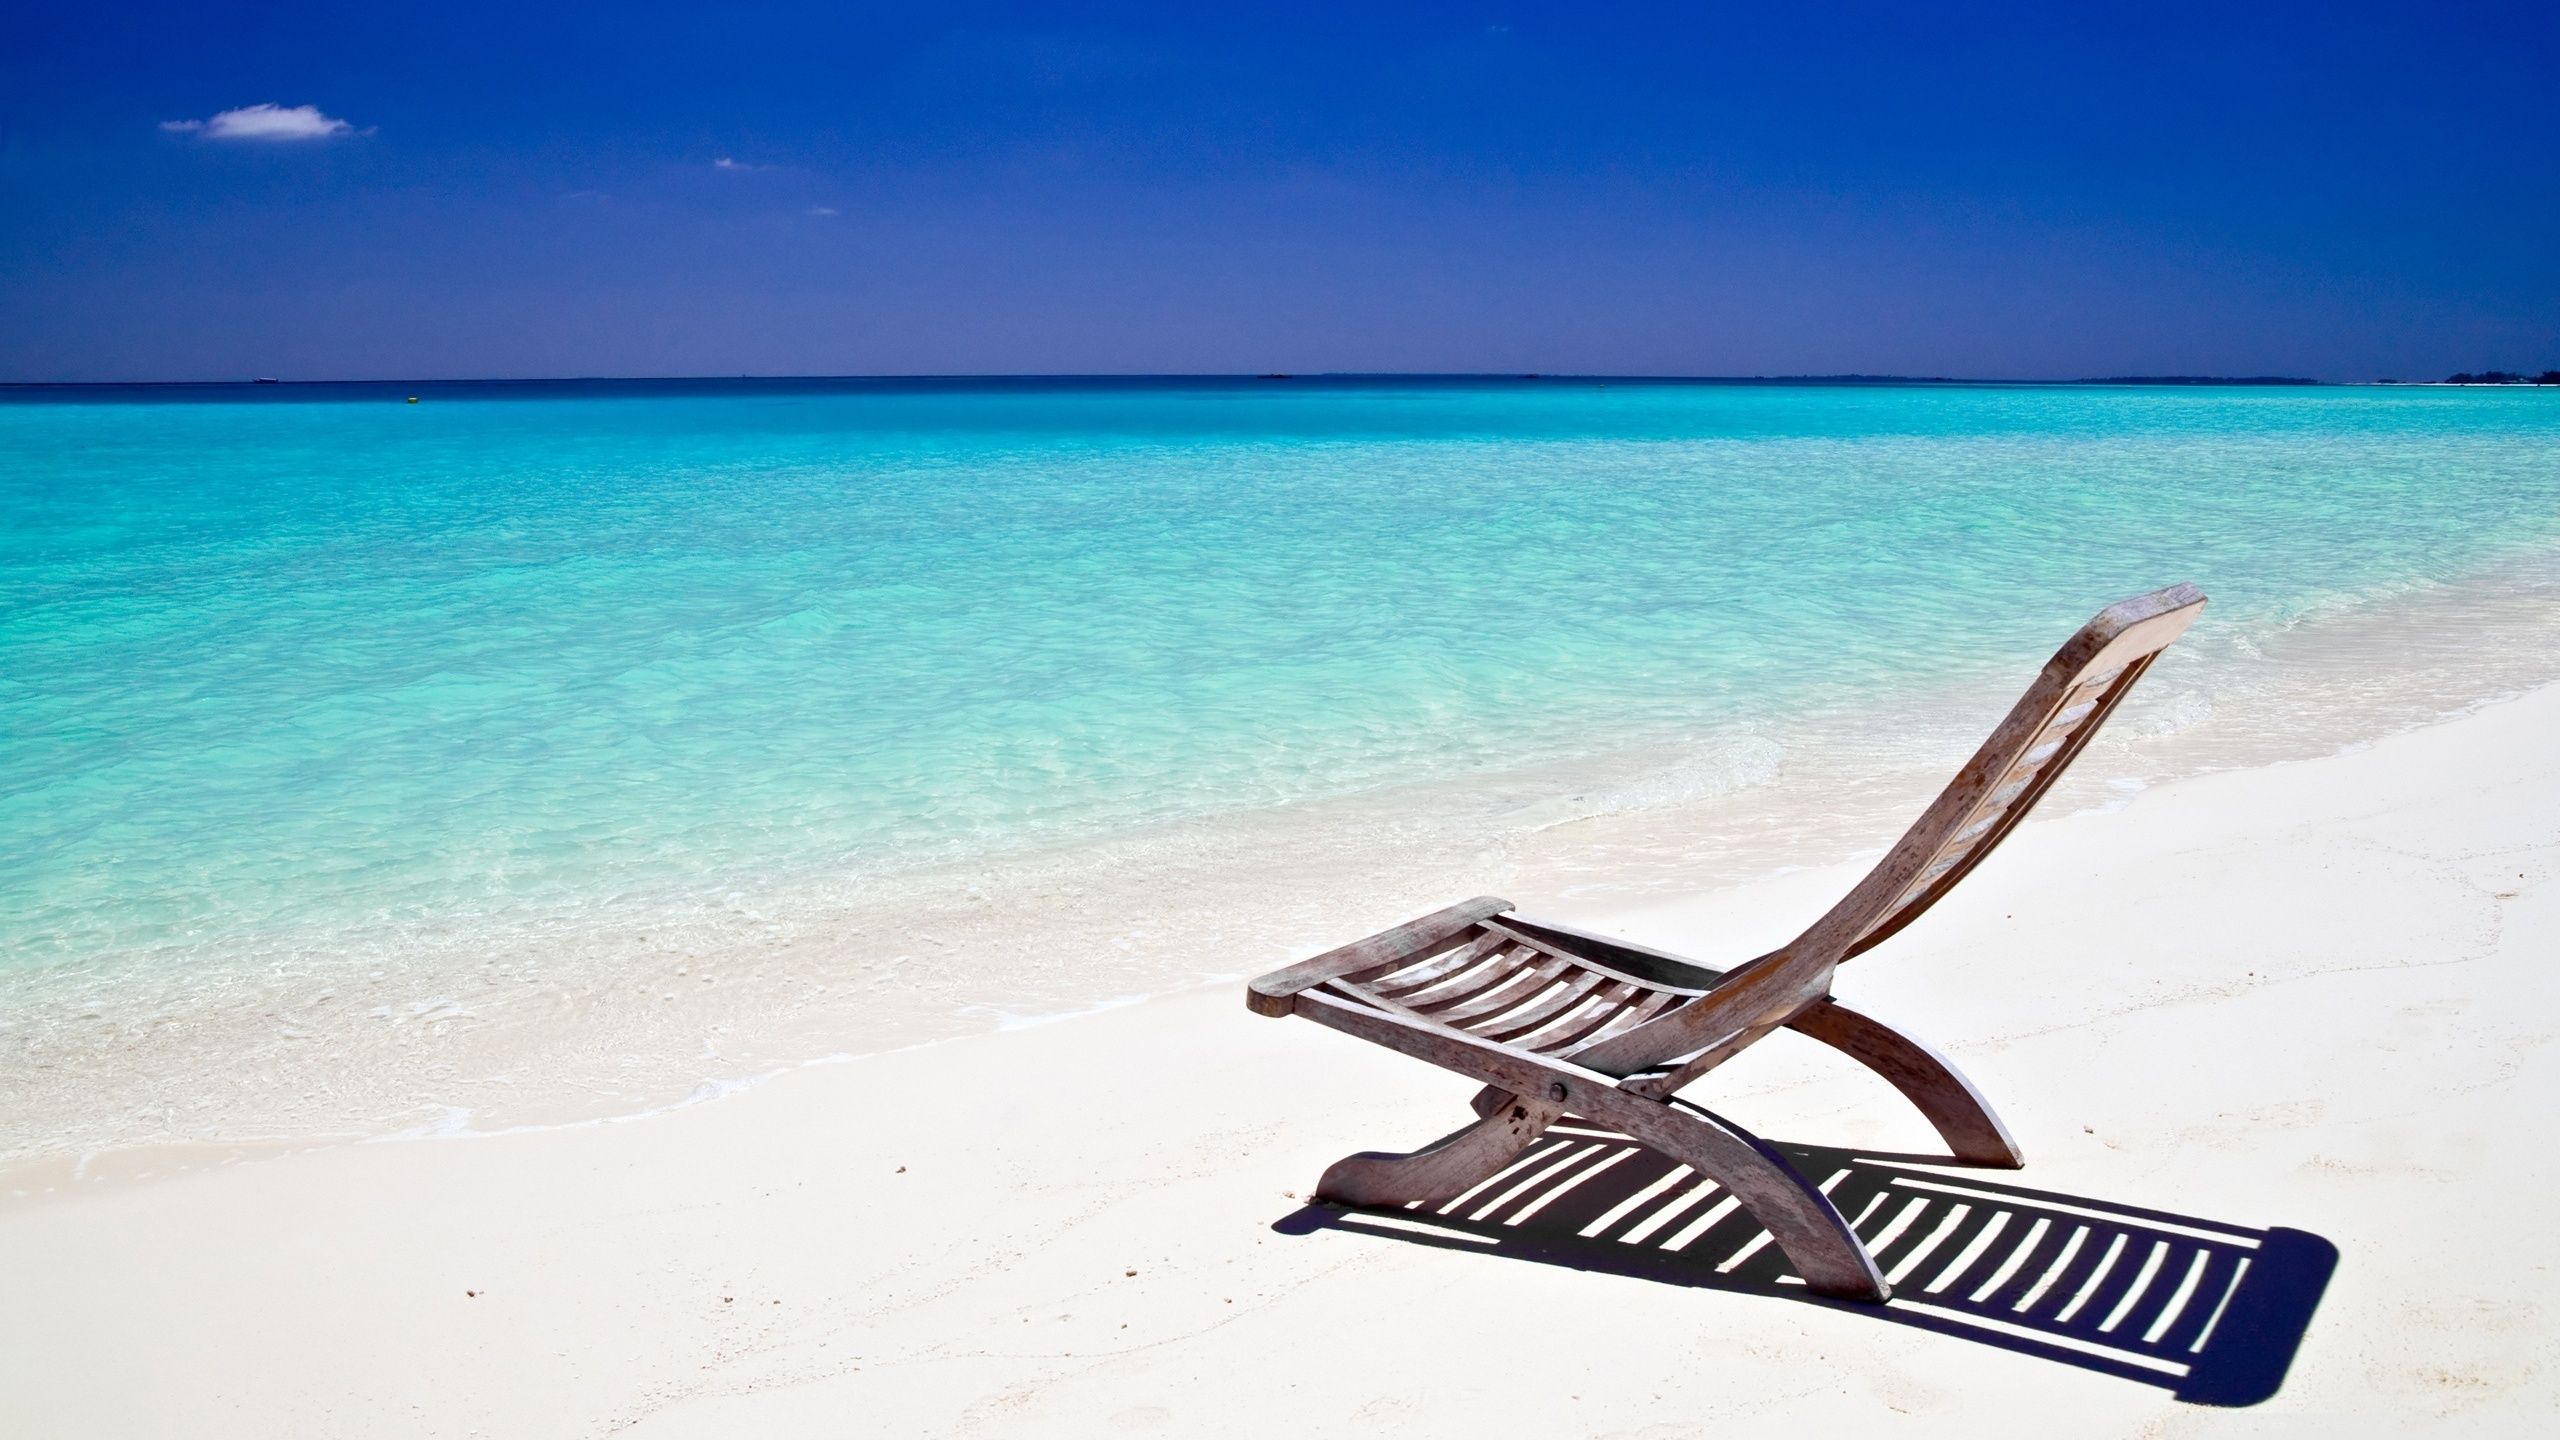 Beach Lounge Chair Ultra HD Desktop Background Wallpaper for 4K UHD TV, Multi Display, Dual Monitor, Tablet